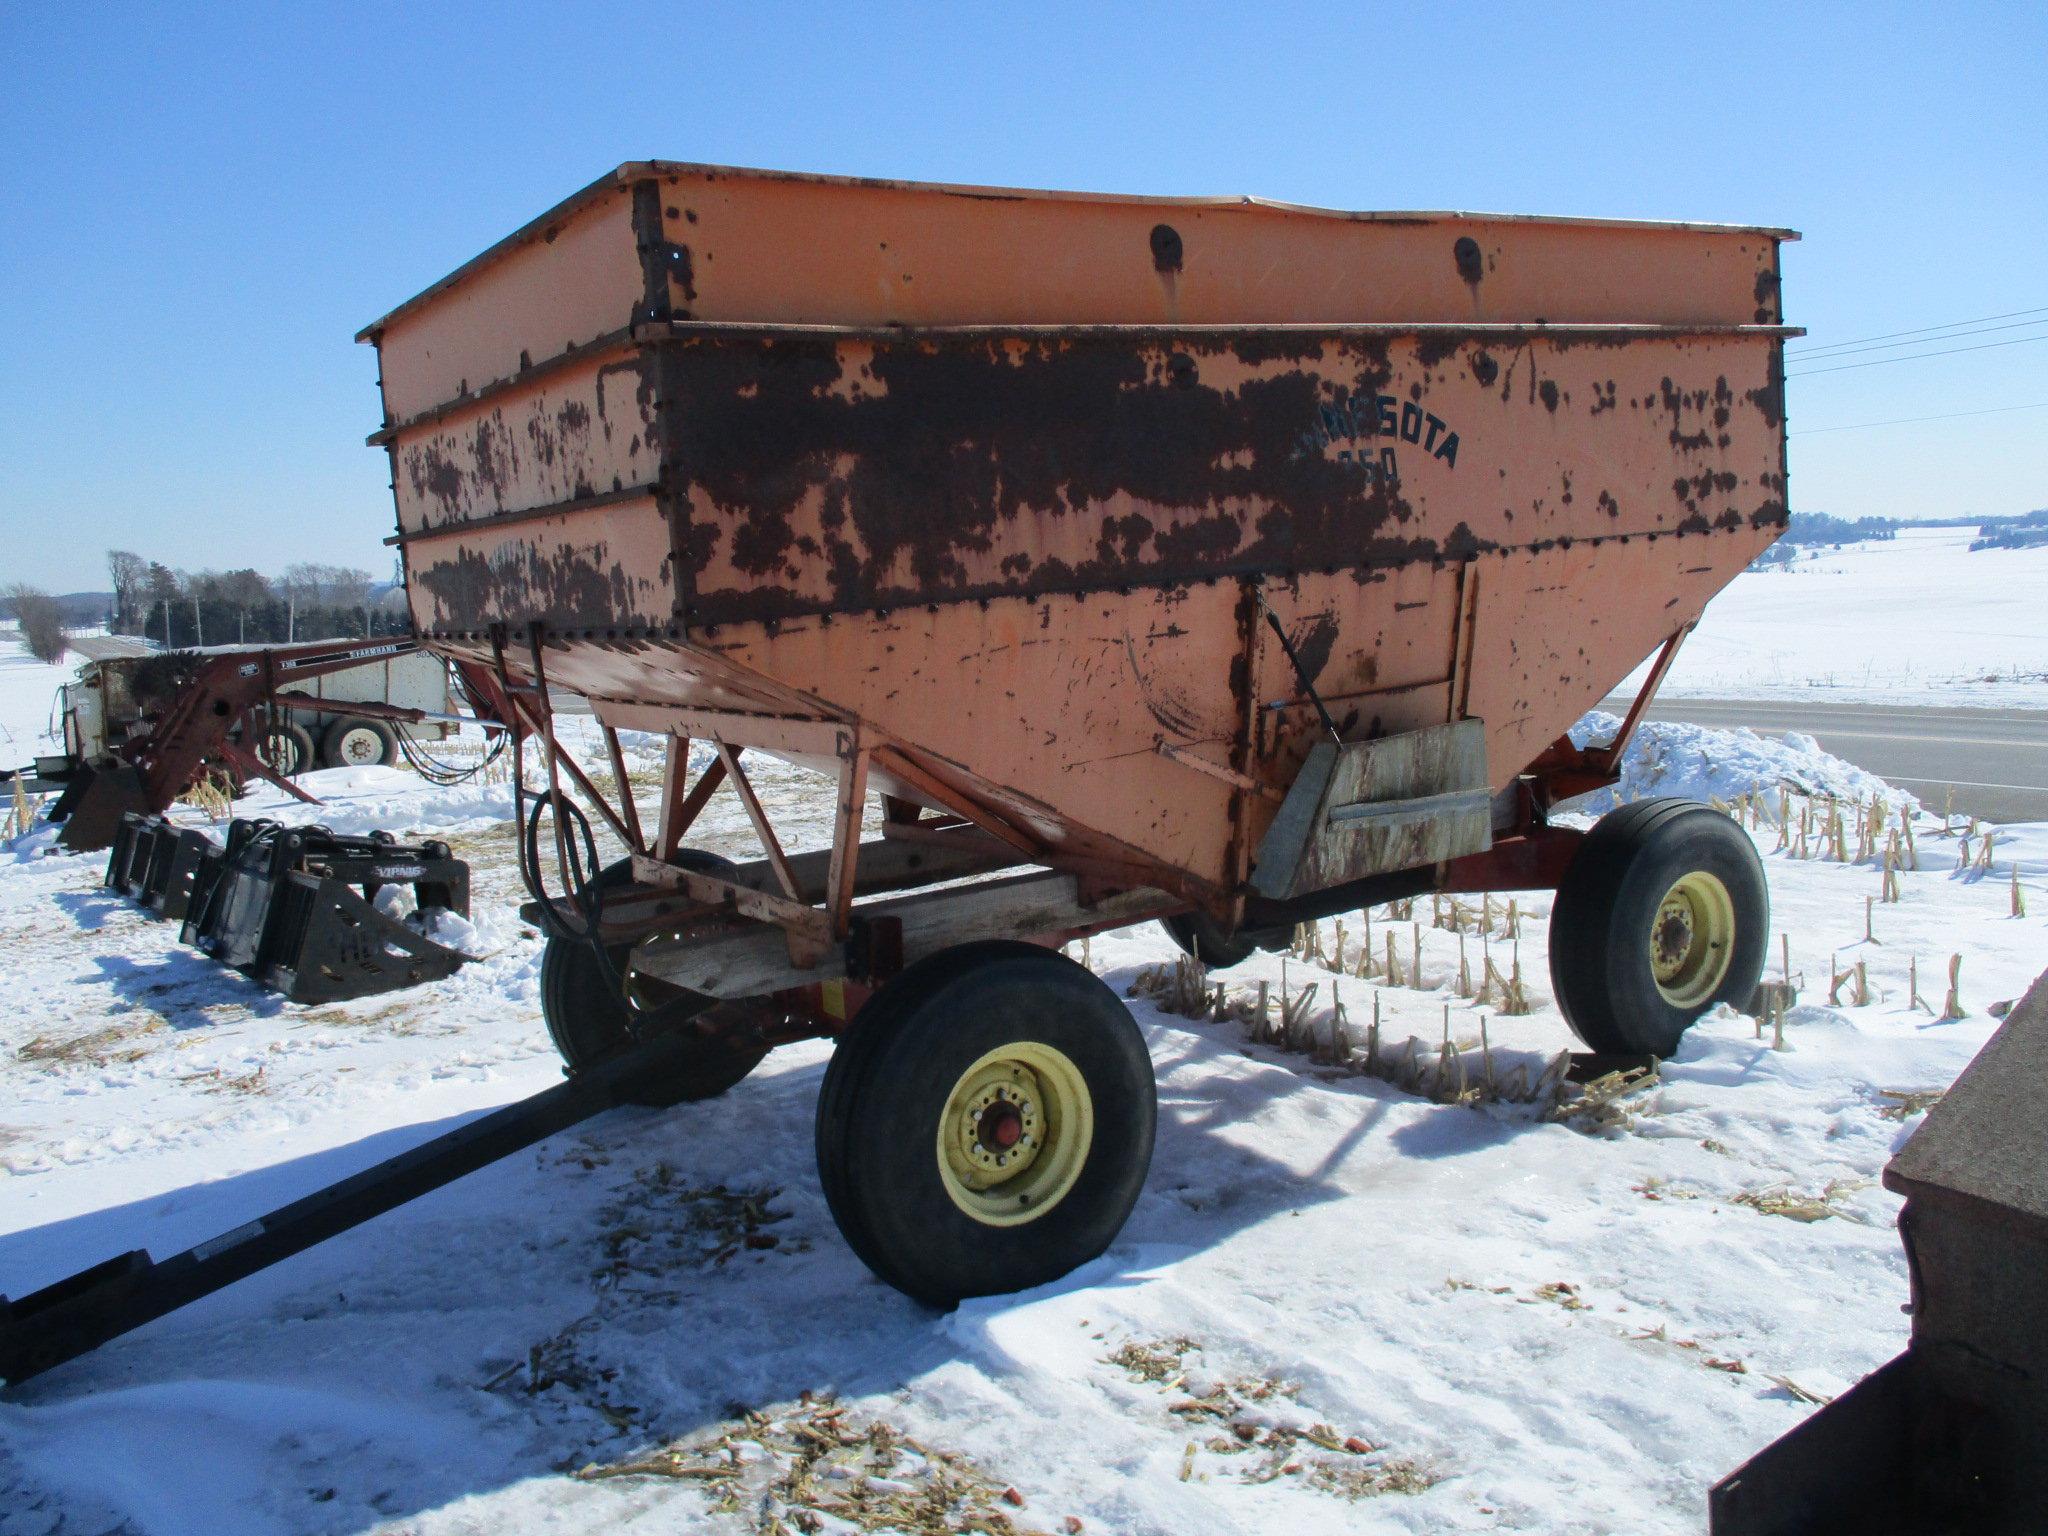 Minnesota 250 gravity wagon, MN 10 ton gear, 10:00 - 15 tires